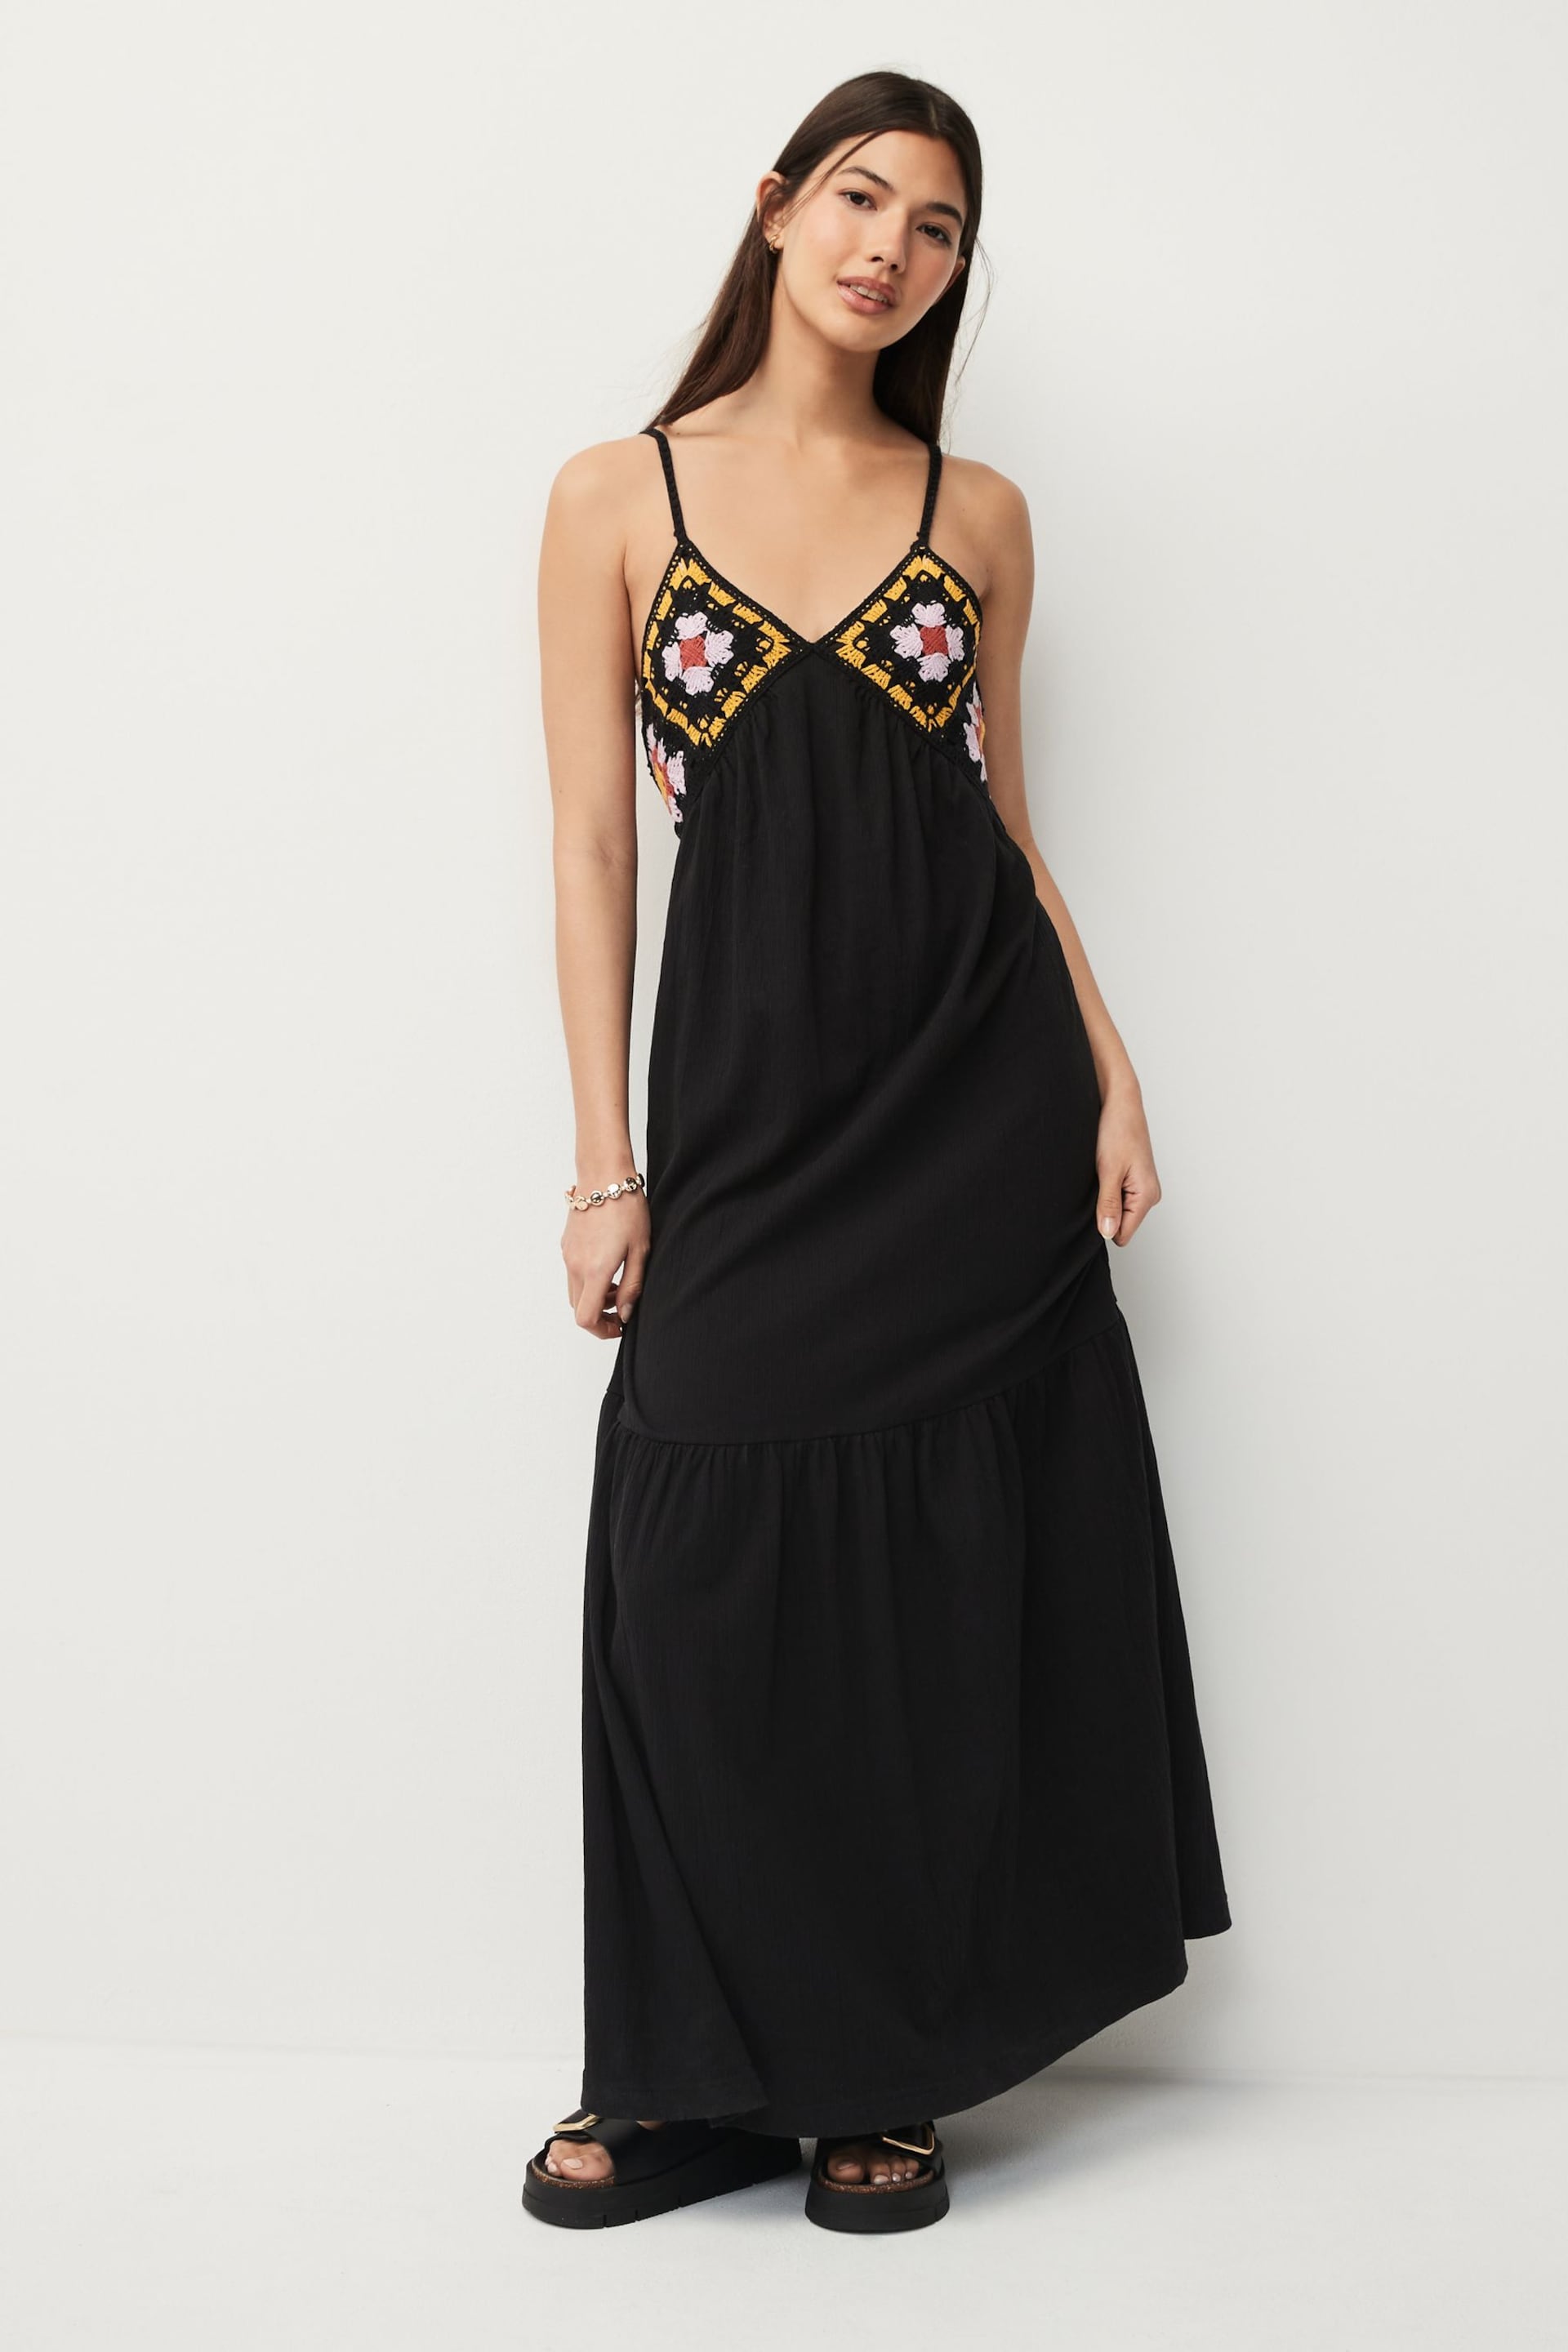 Black/Yellow Crochet Detail Maxi Dress - Image 1 of 7